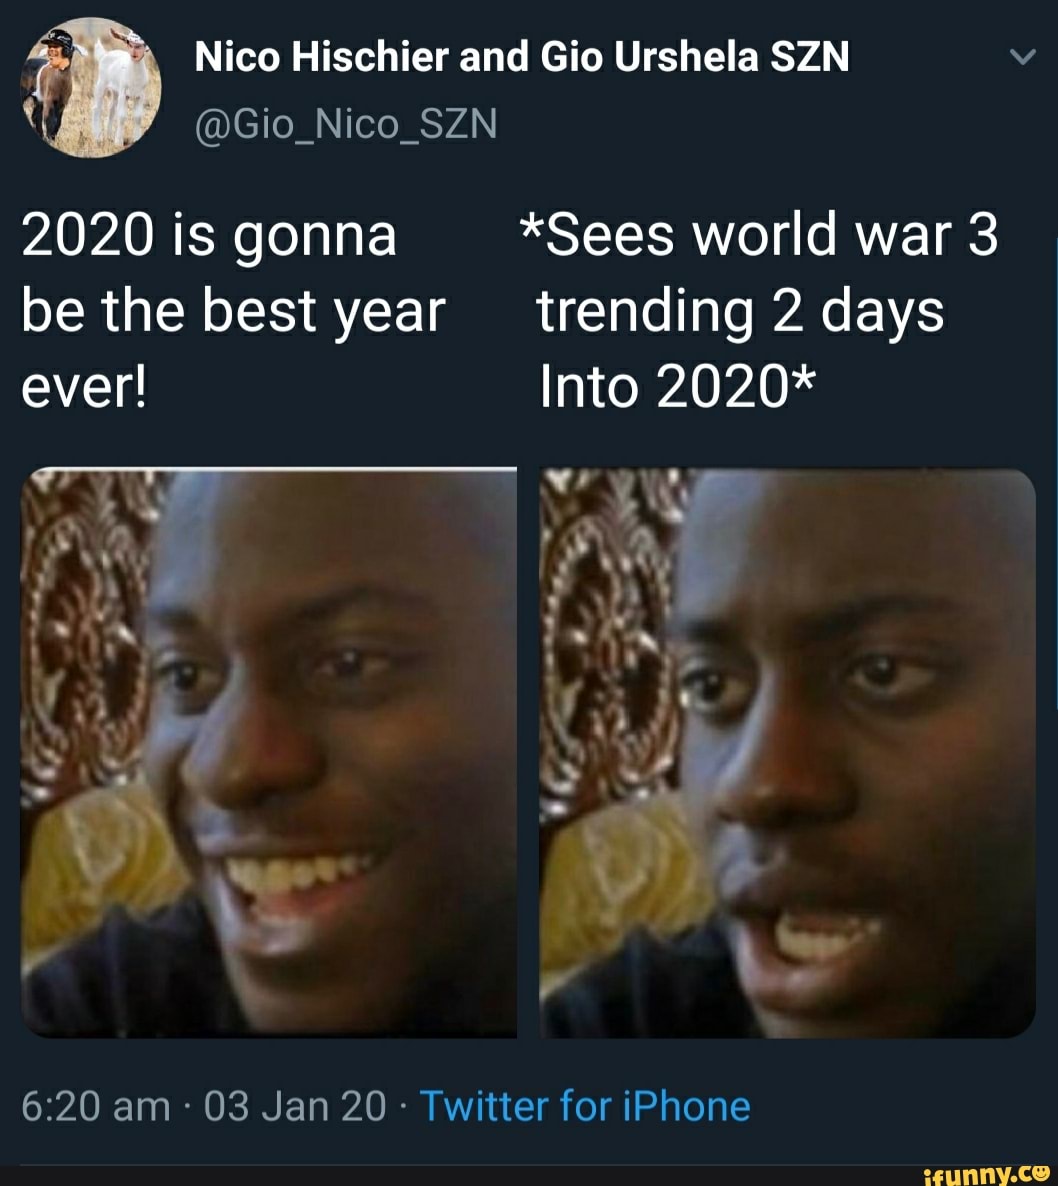 Nico Hischier and Gio Urshela SZN gonna year trending days 2020